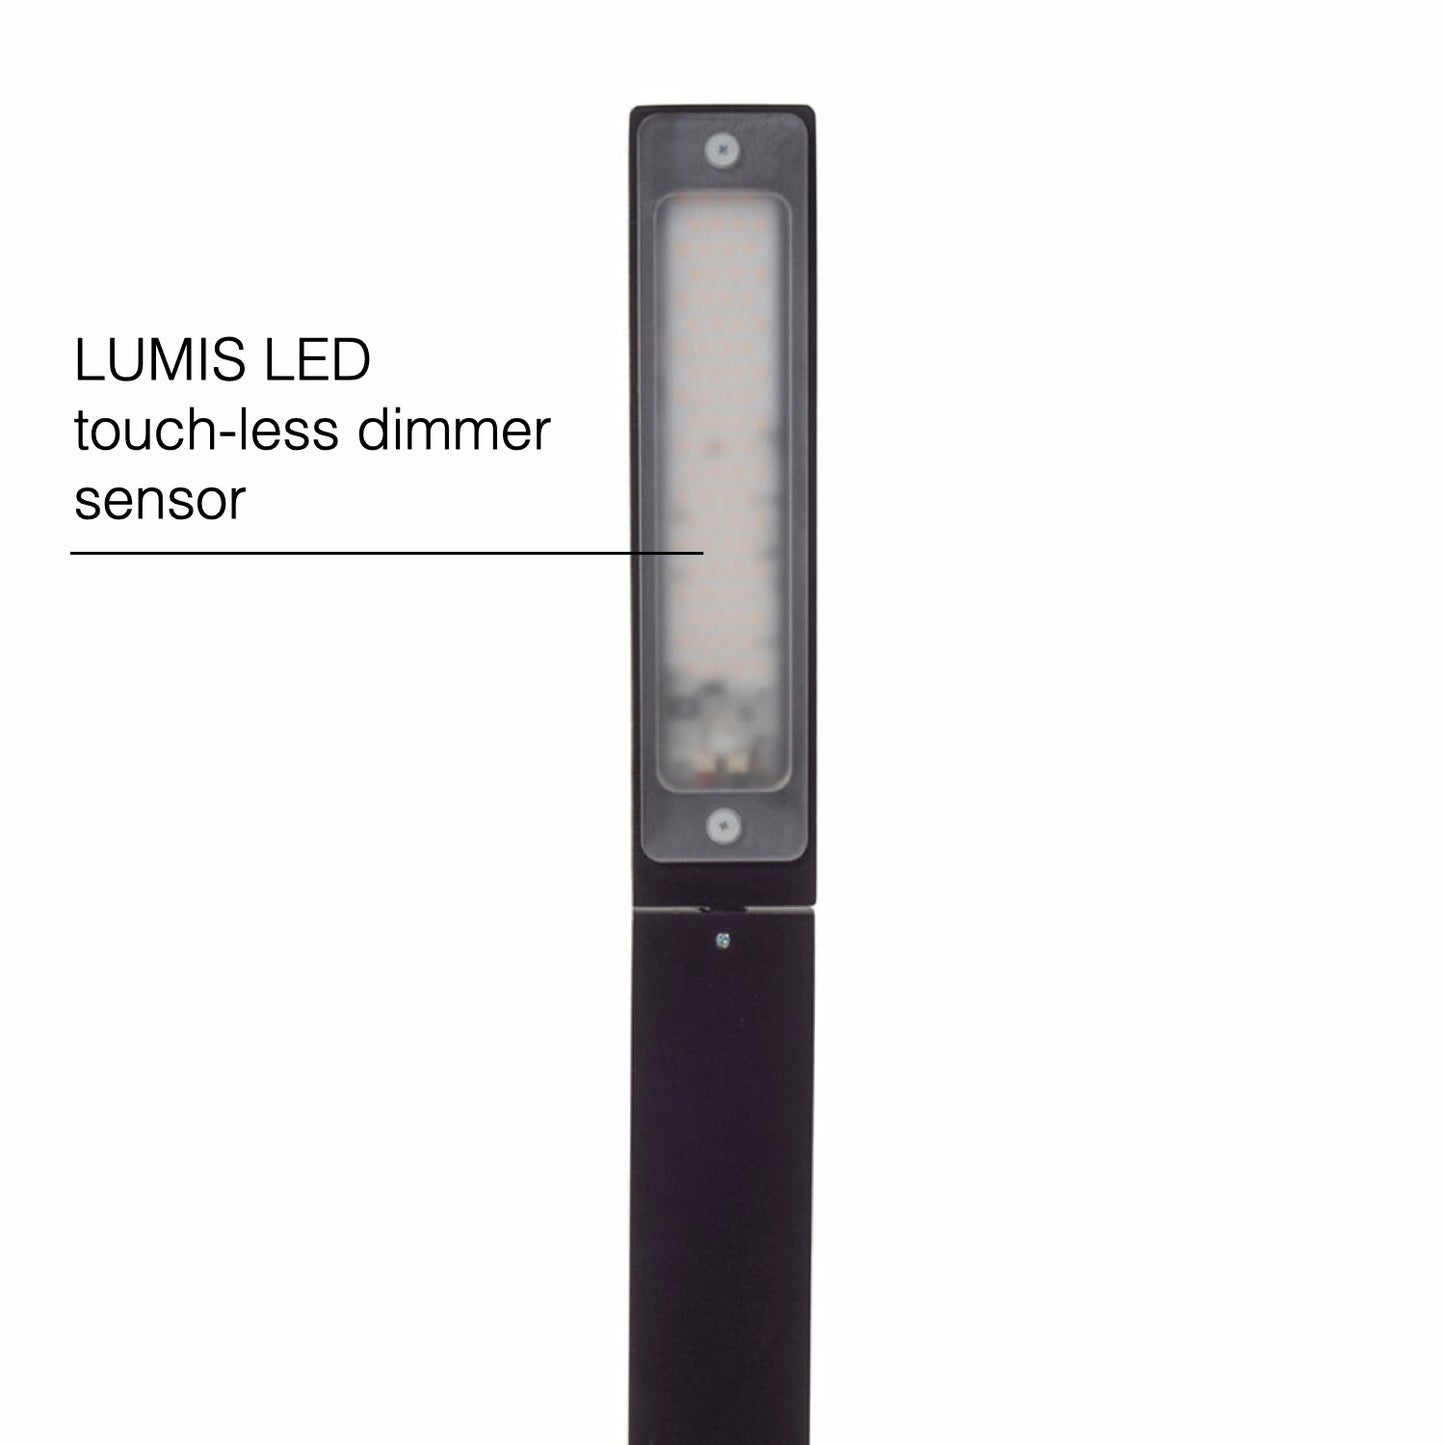 LUMIS touch-less dimmer sensor